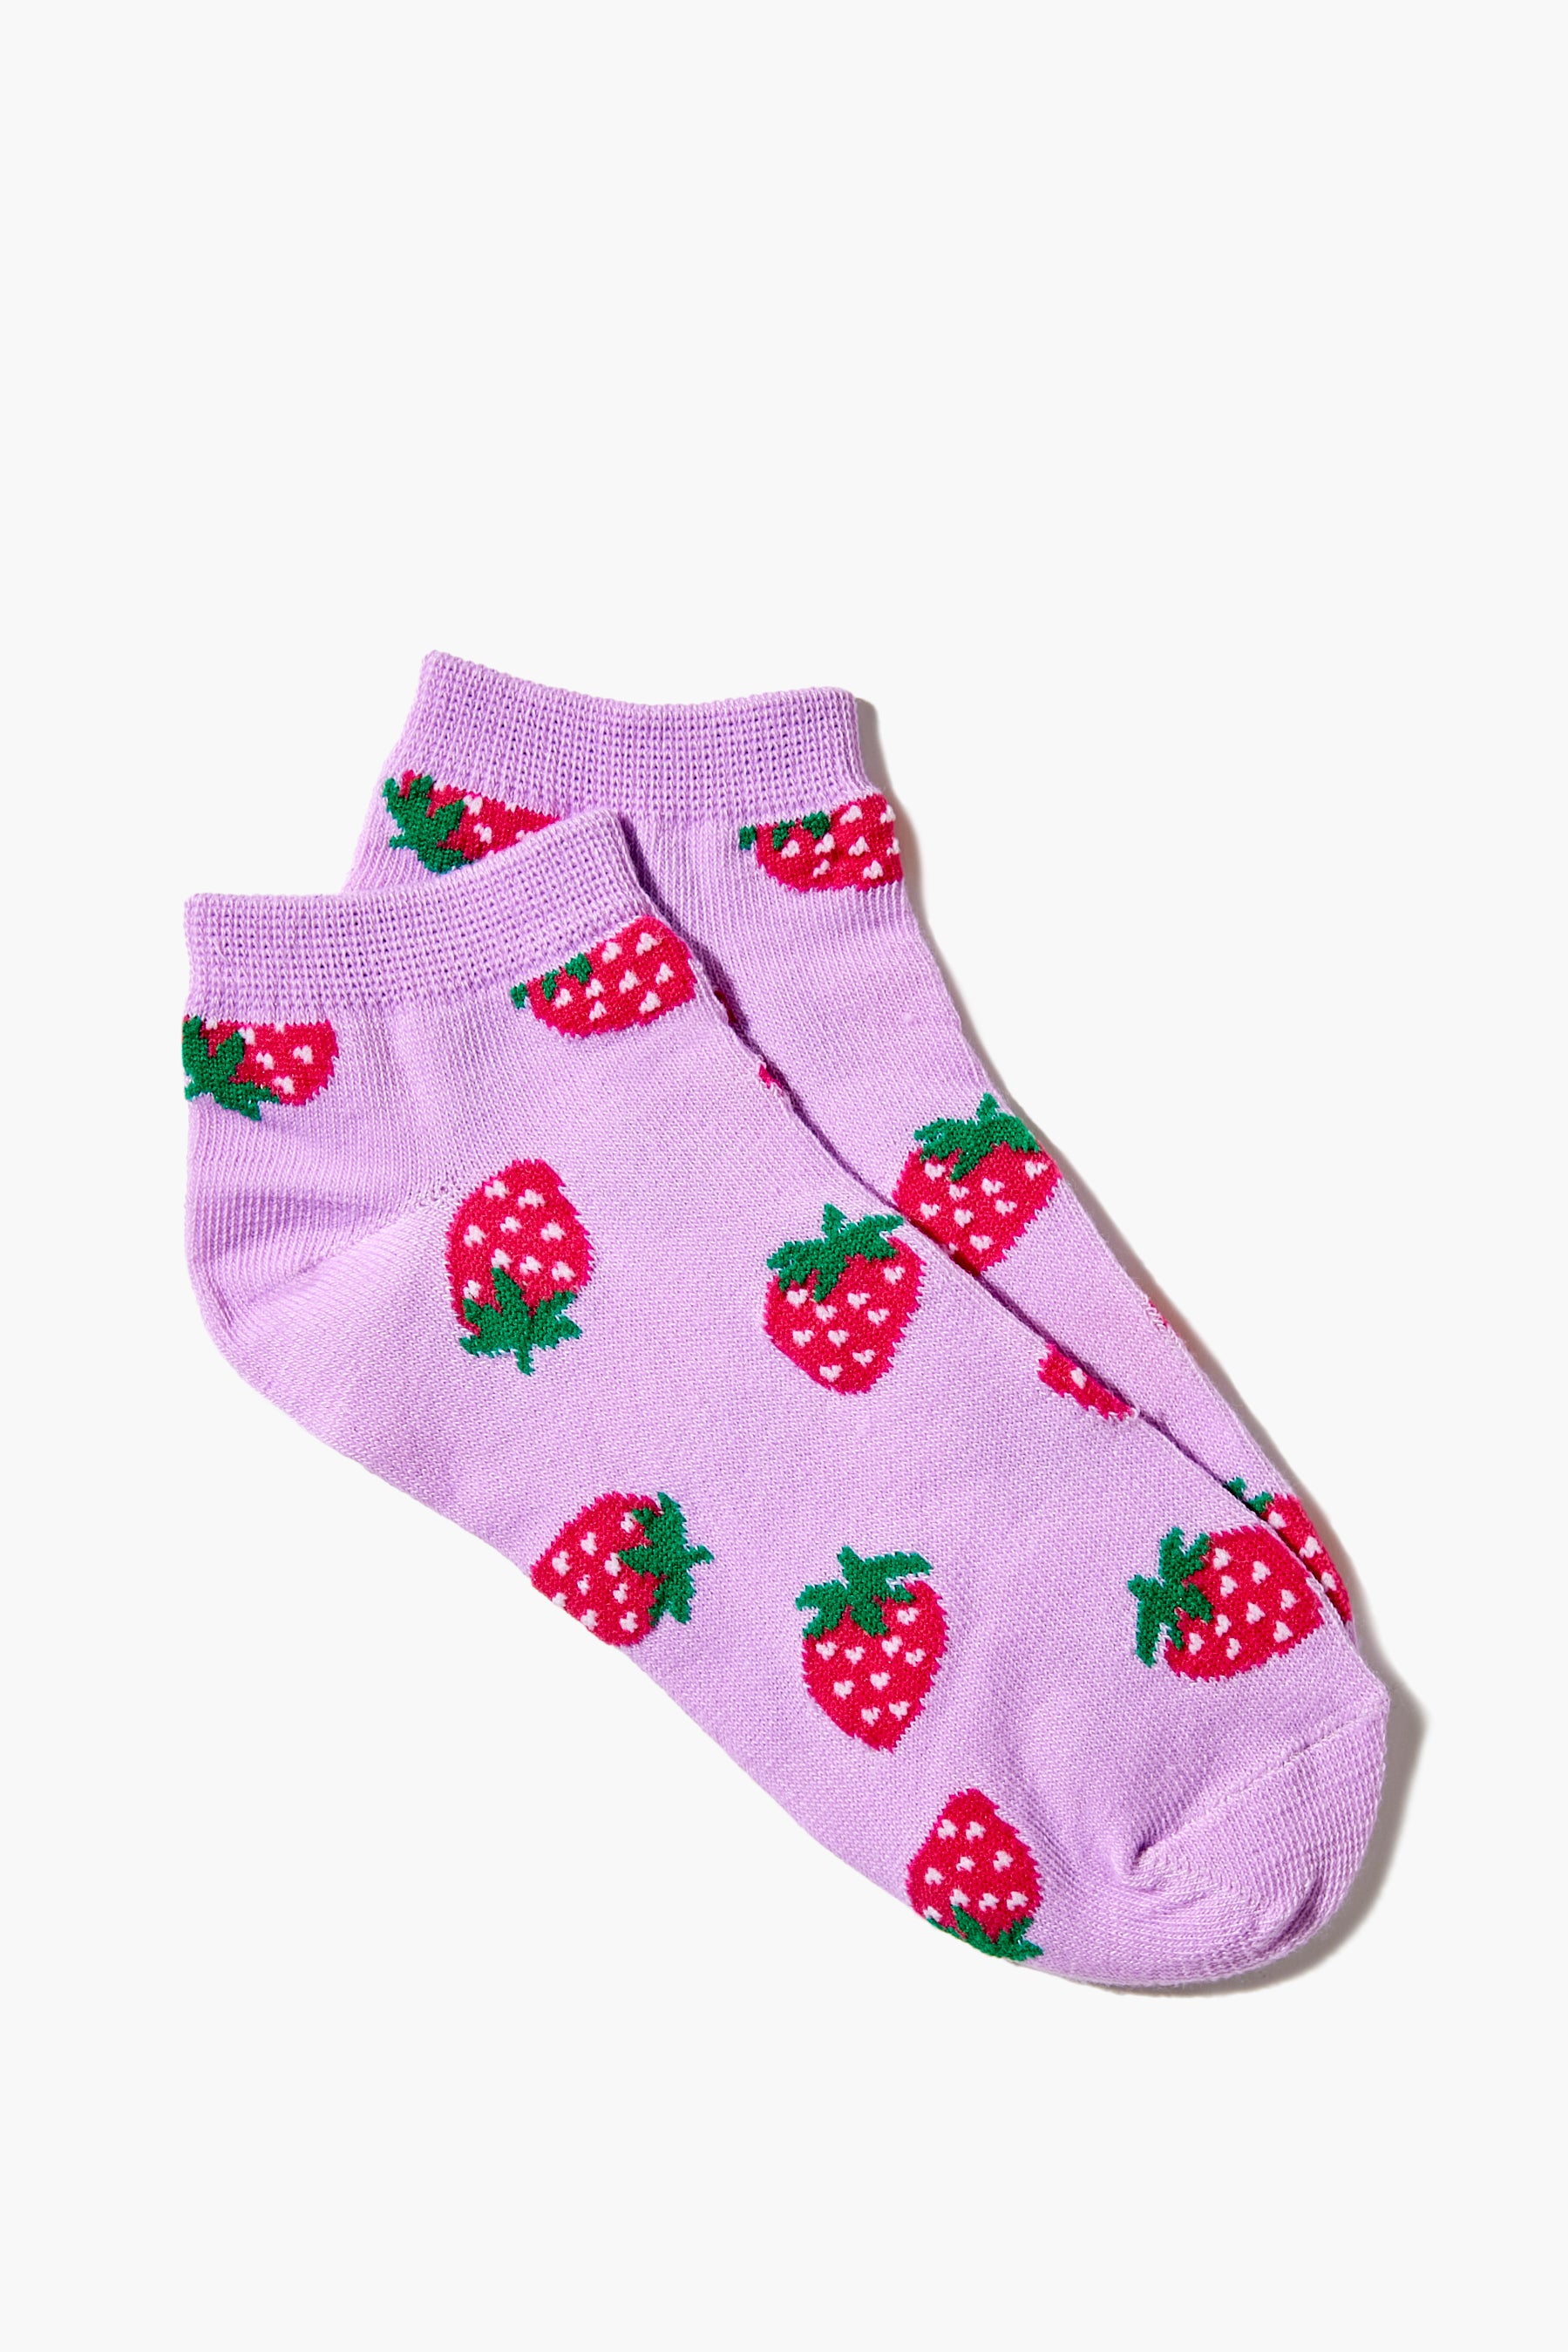 Lavendermulti Strawberry Print Ankle Socks 1